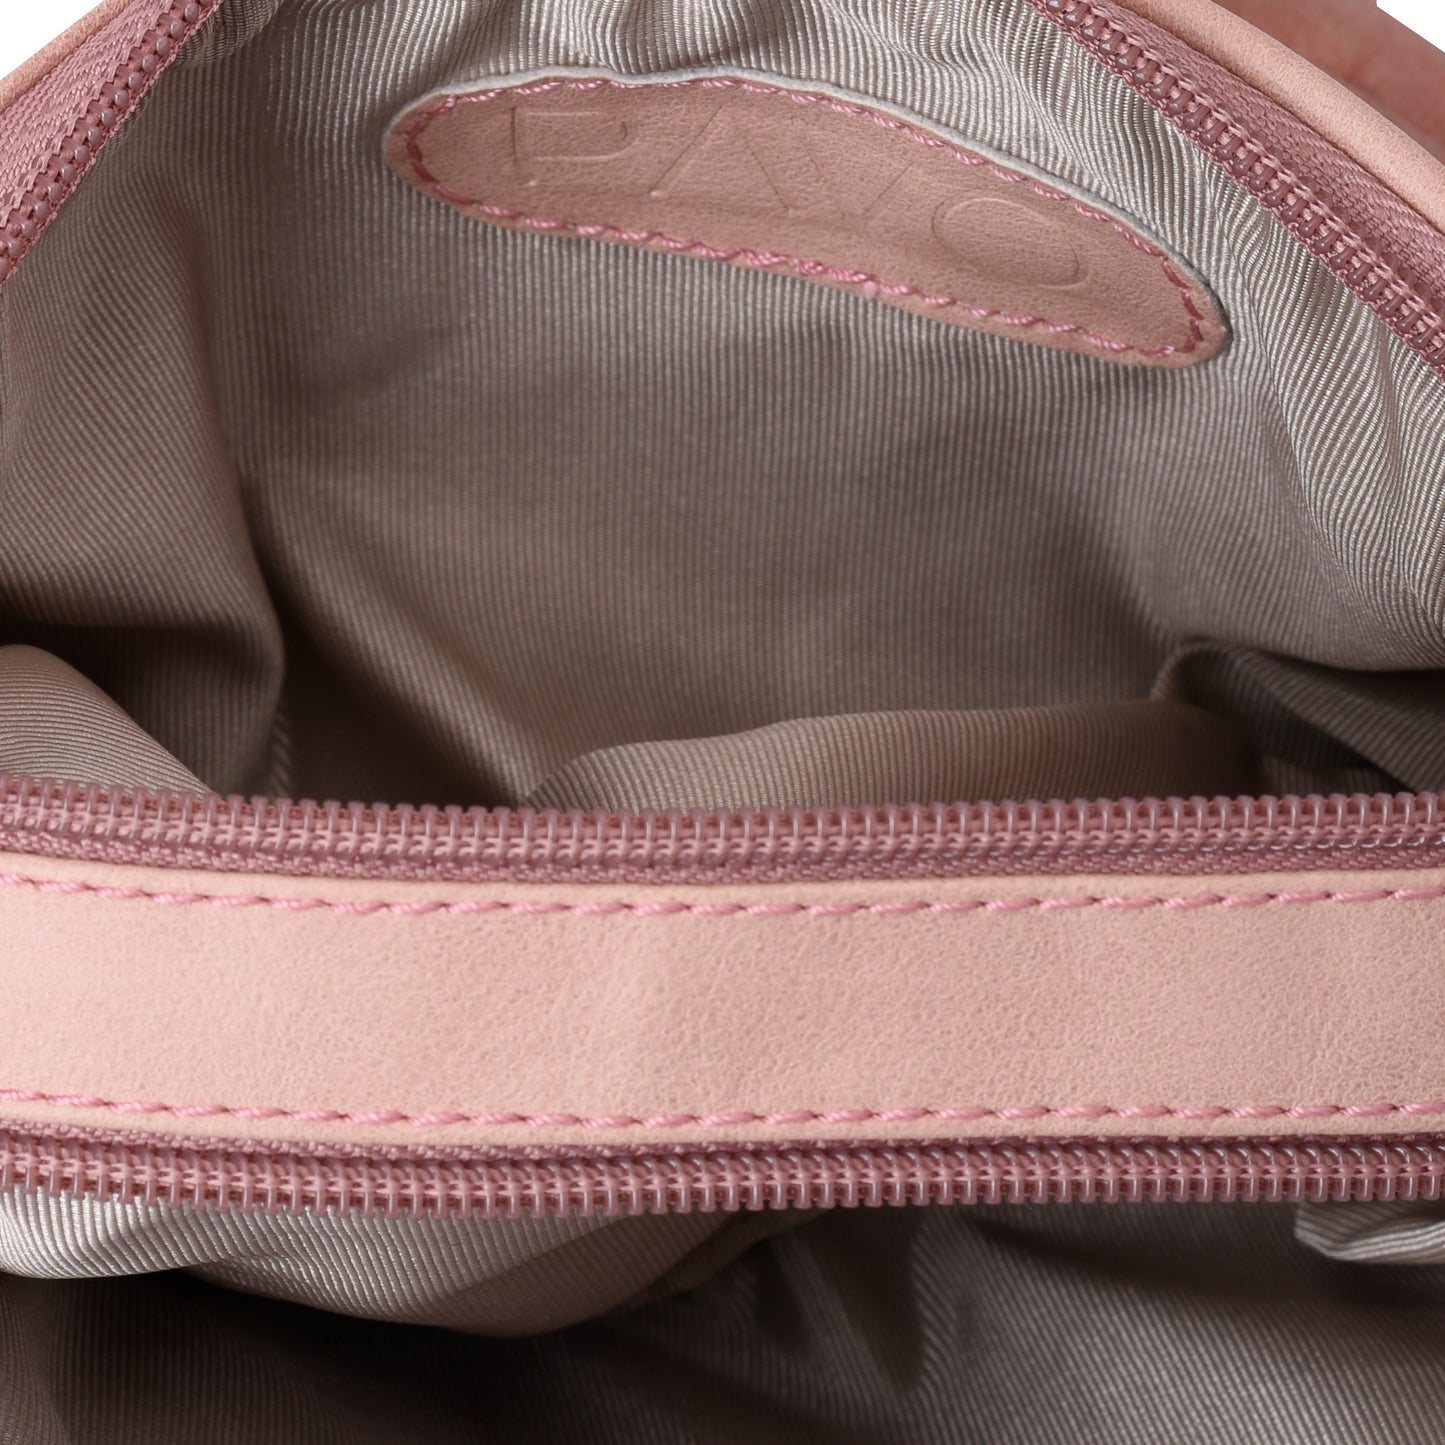 Engraved Pink Hobo Handbag - Code 933